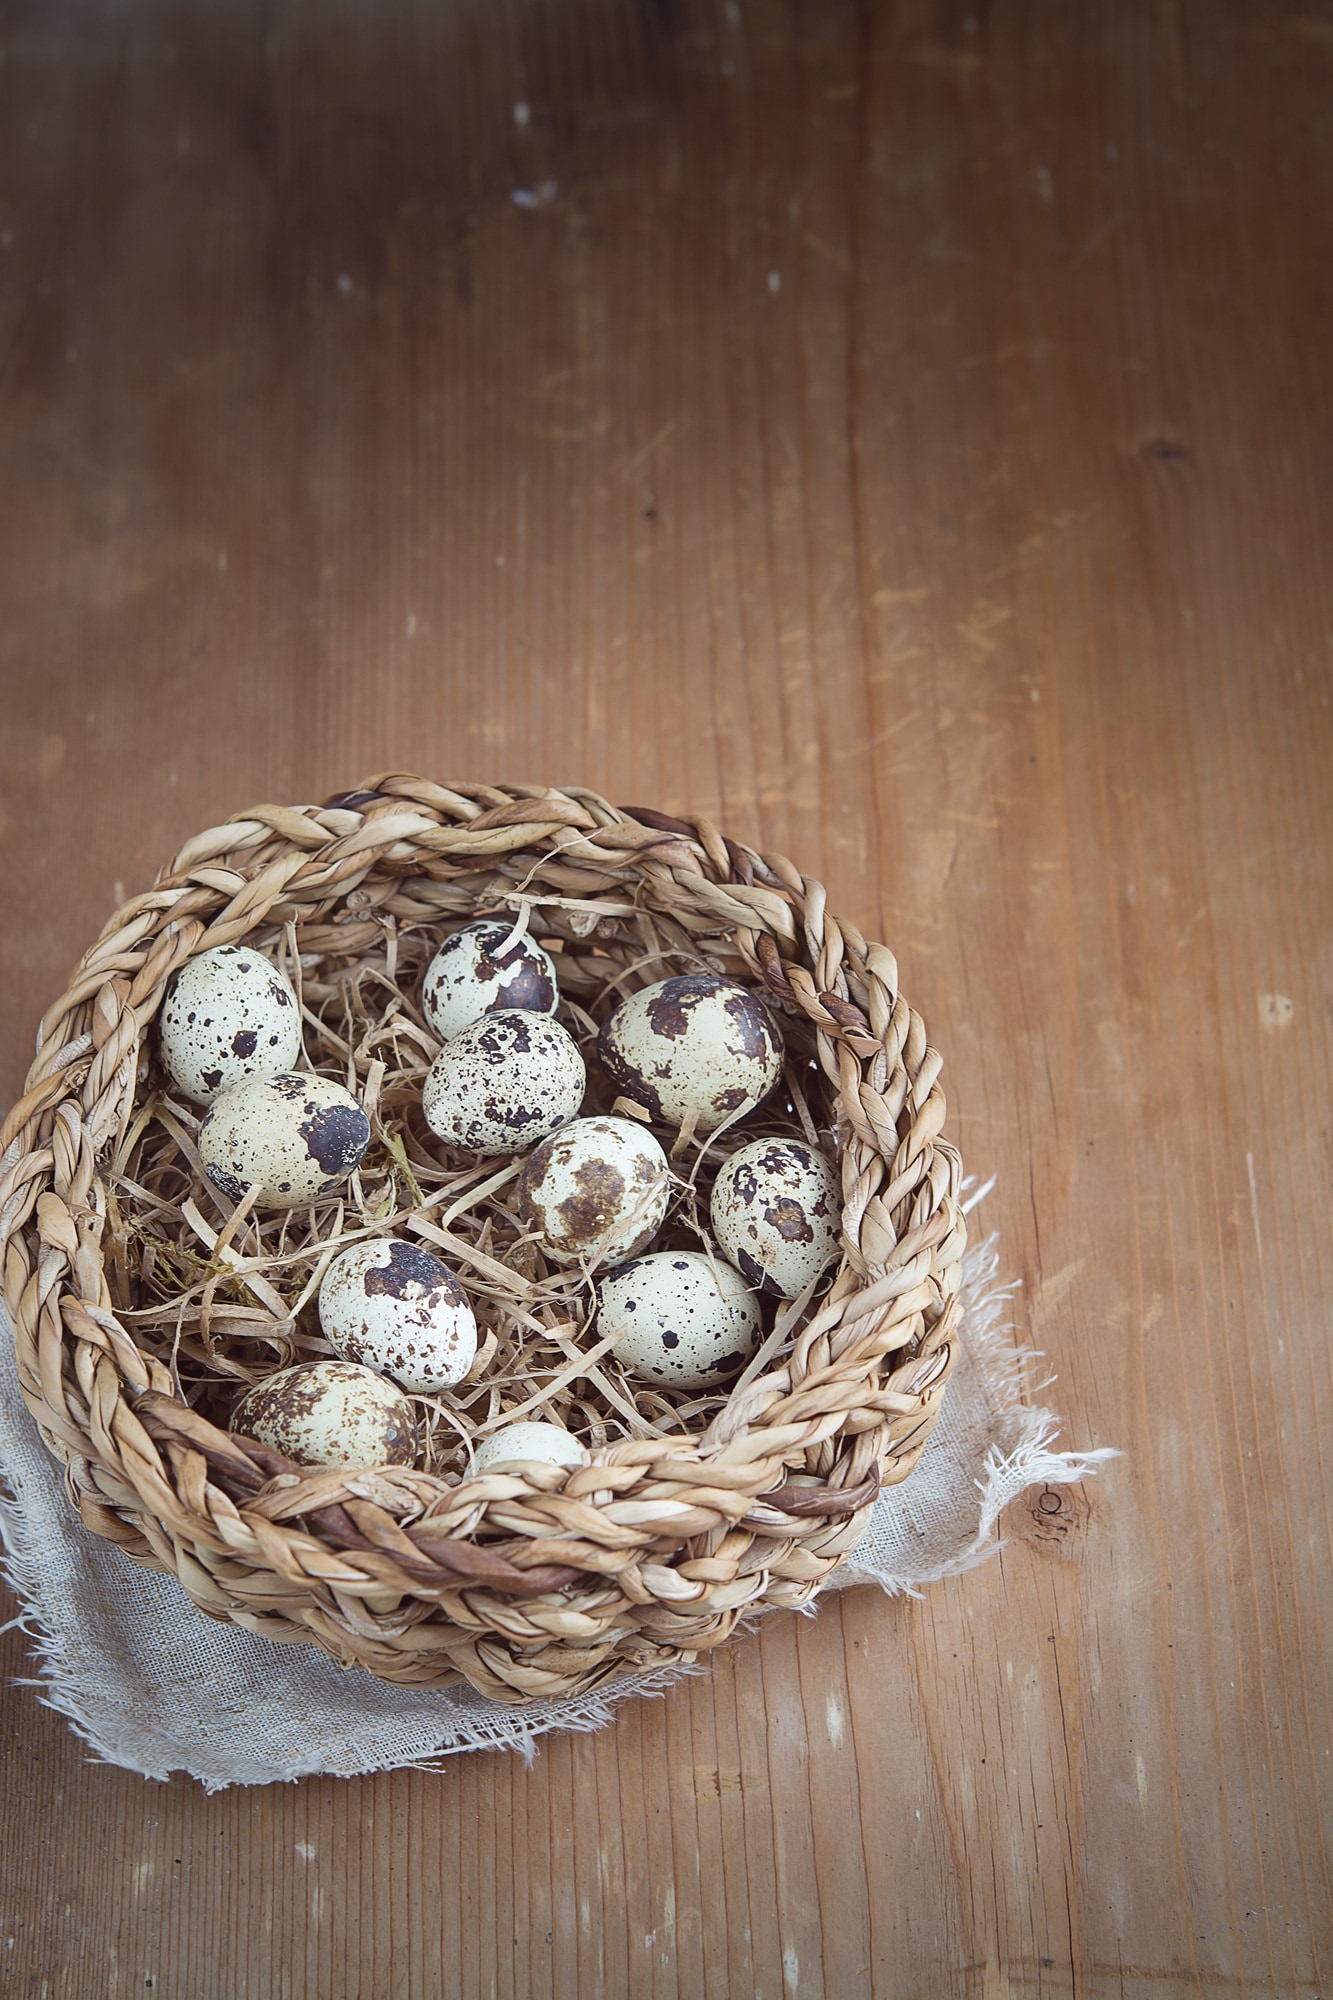 Egg, Basket, Small Eggs, Quail Eggs, wood - material, indoors